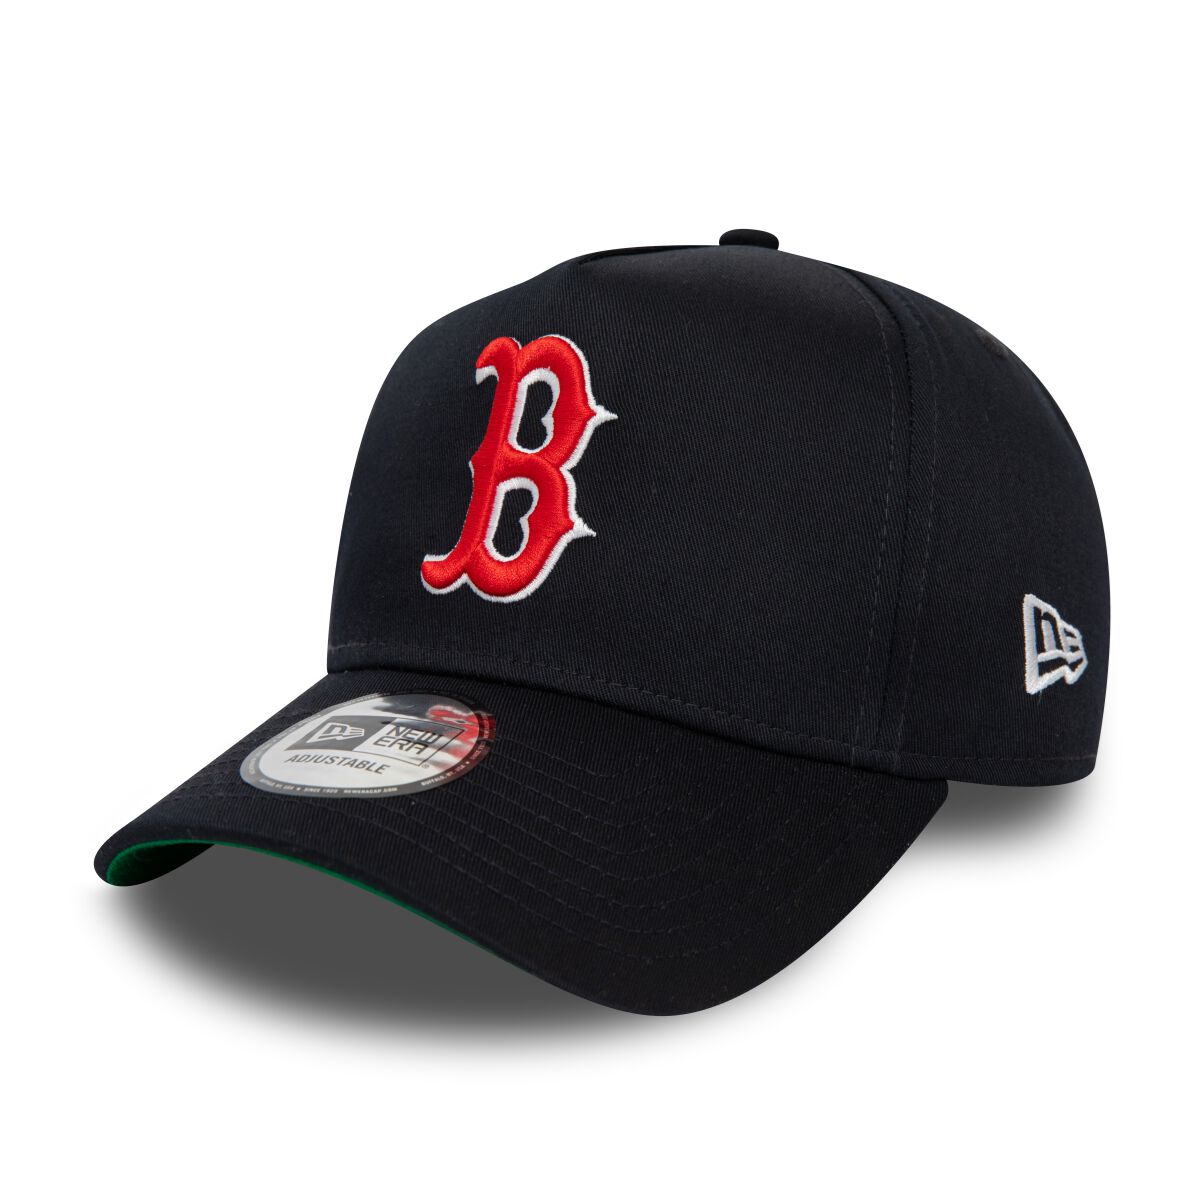 New Era - MLB 9FORTY Boston Red Sox Cap multicolor